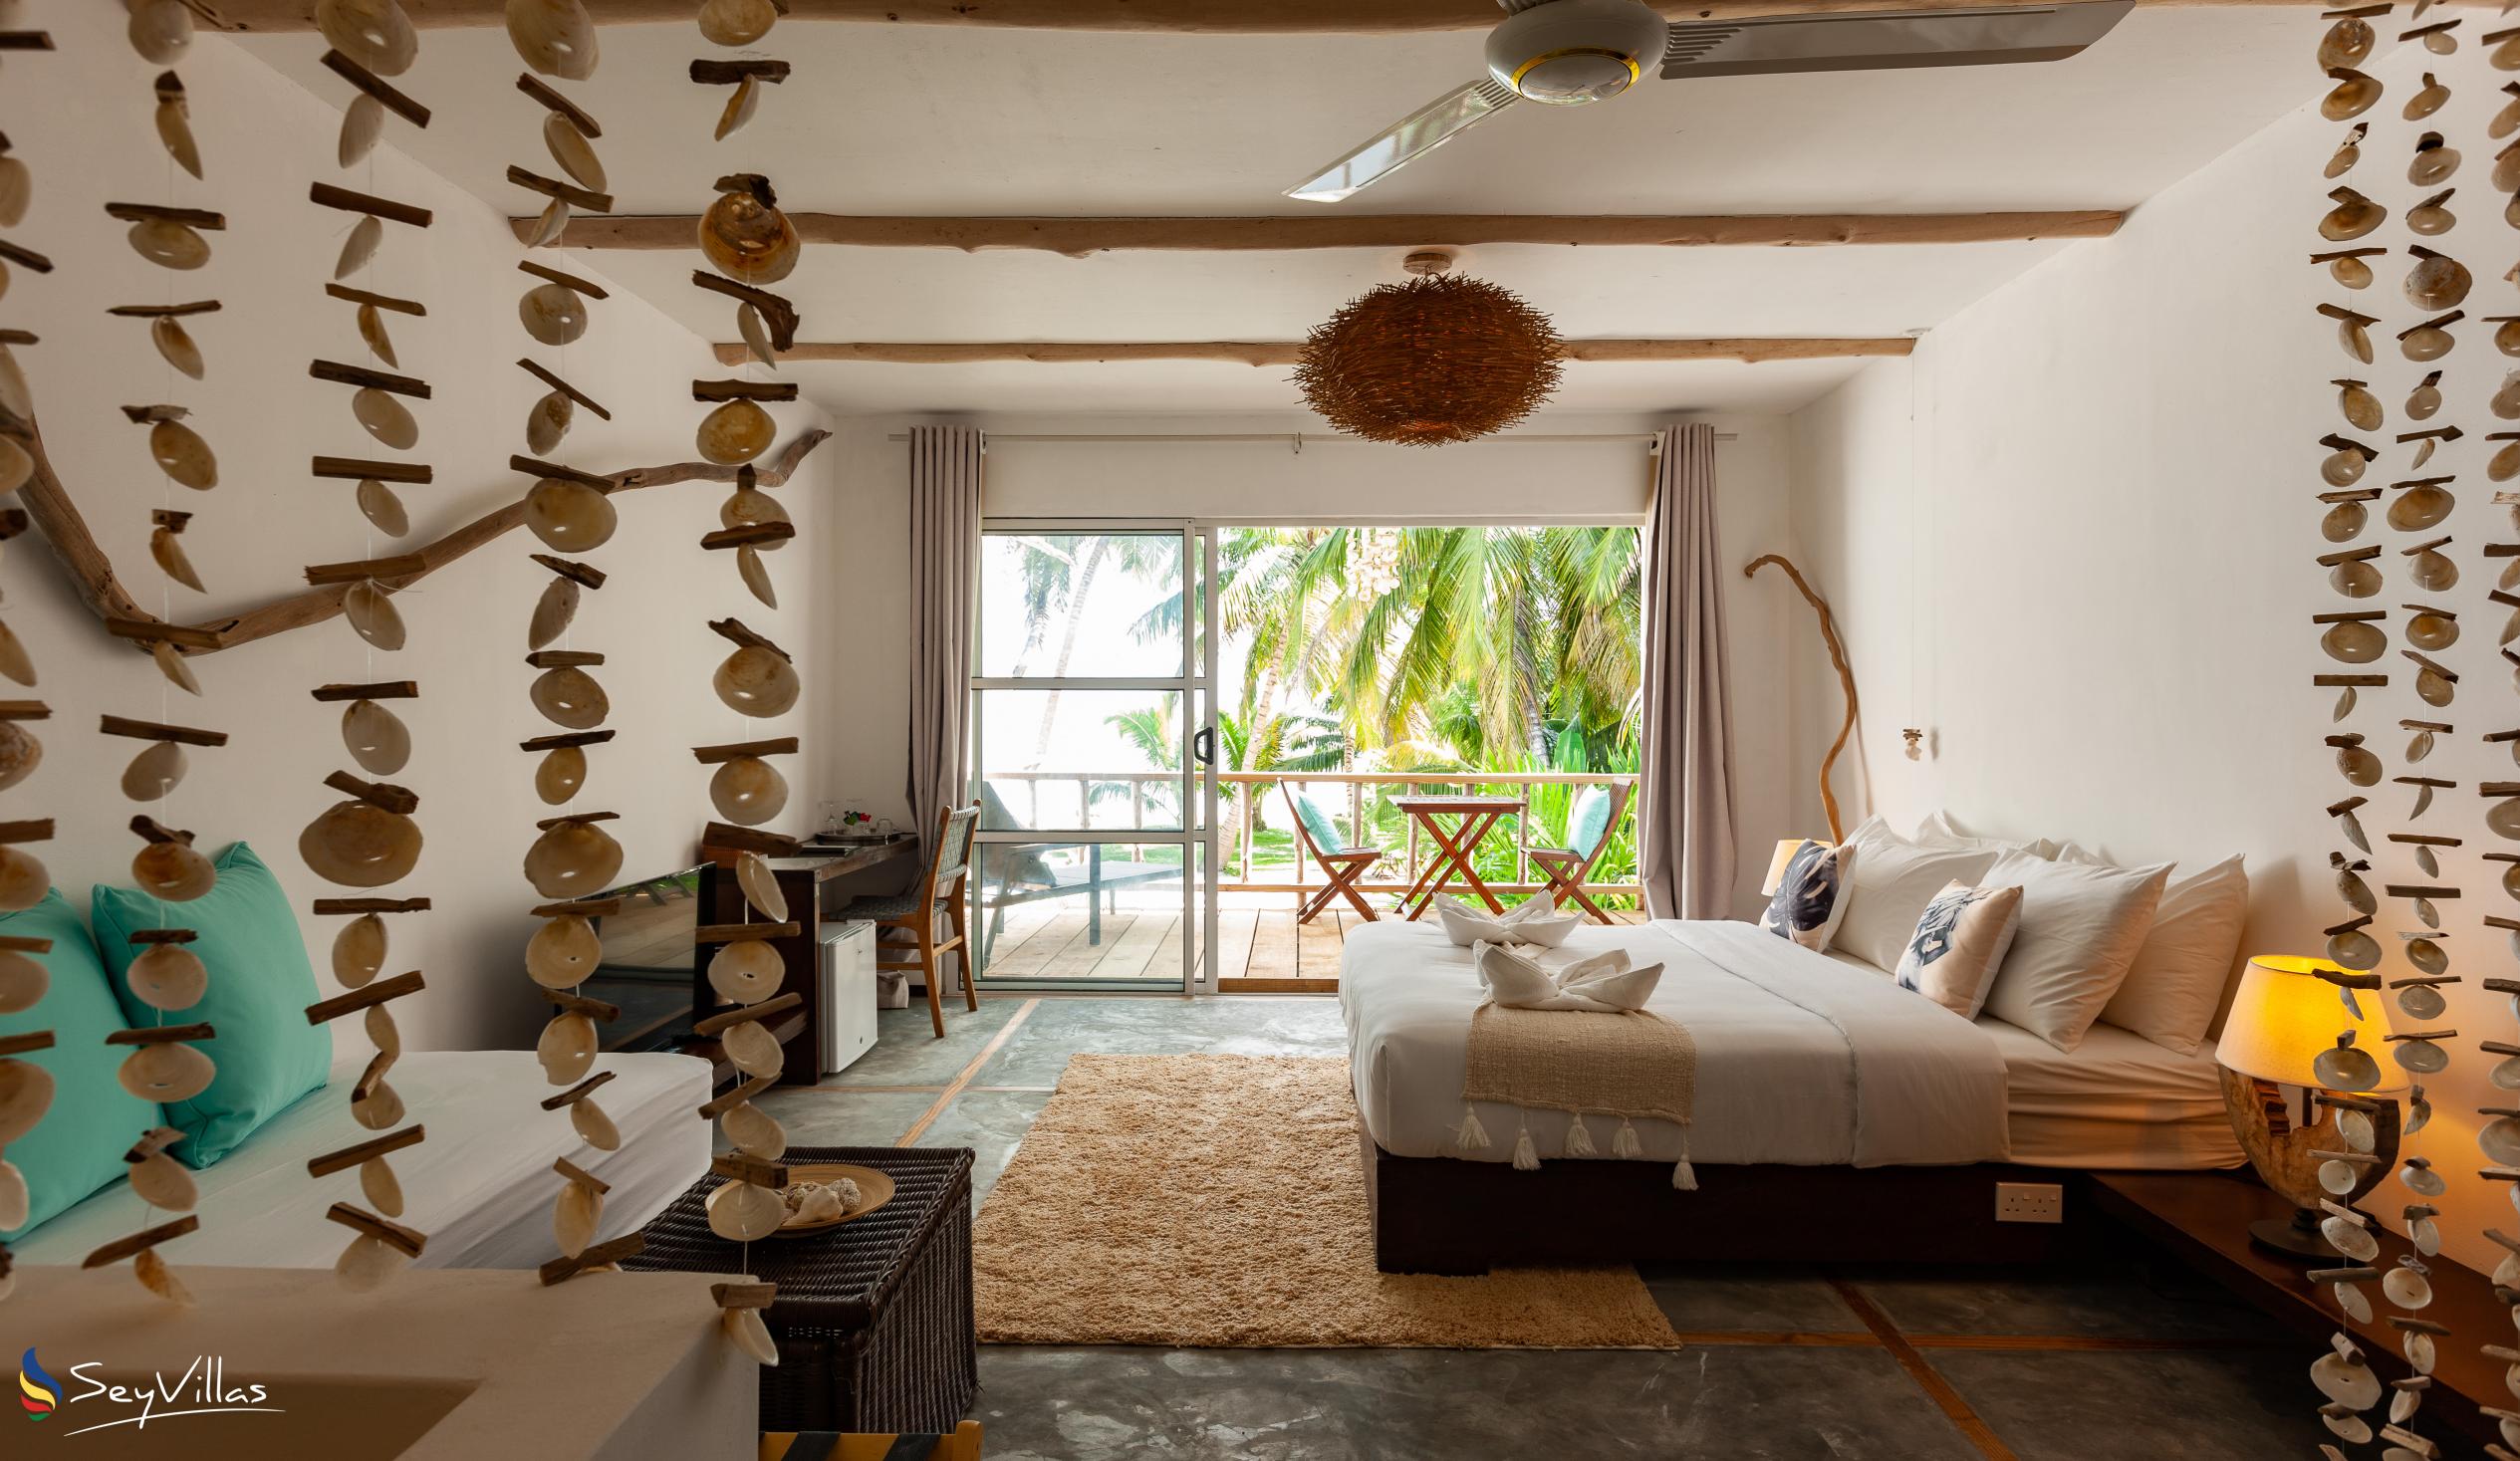 Photo 134: Bliss Hotel Praslin - Beach House - Beach Superior Room - Praslin (Seychelles)